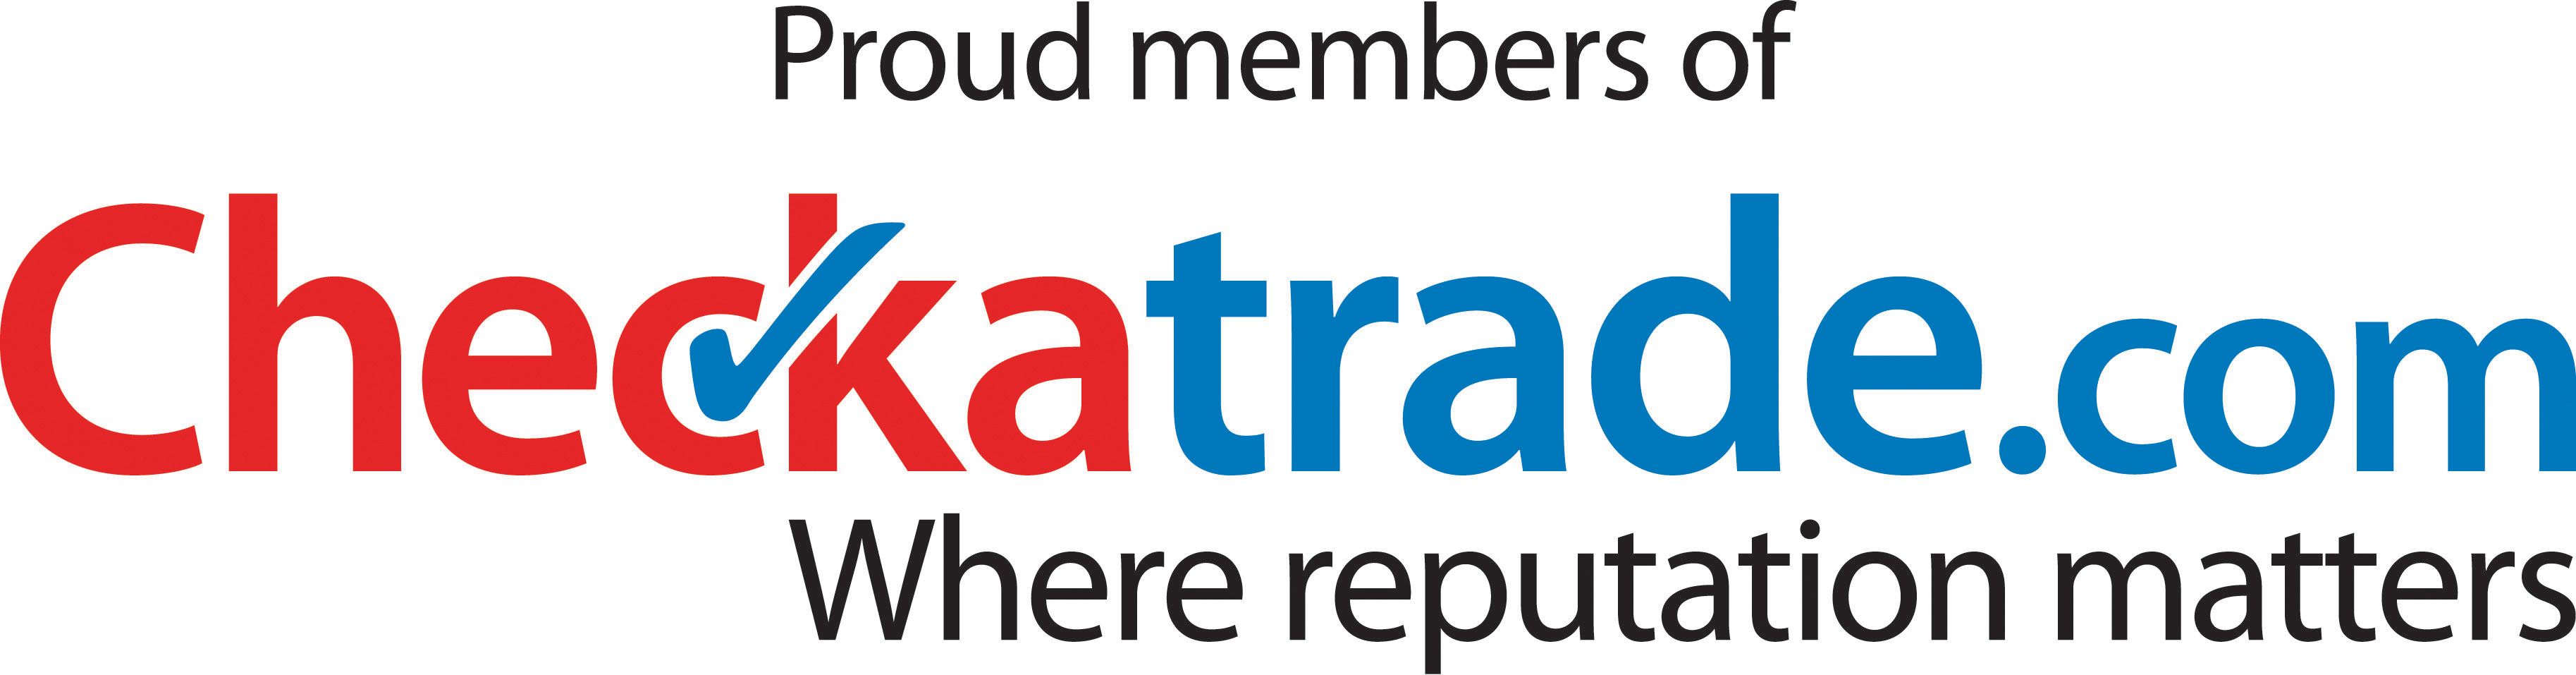 footer image of checkAtrade logo